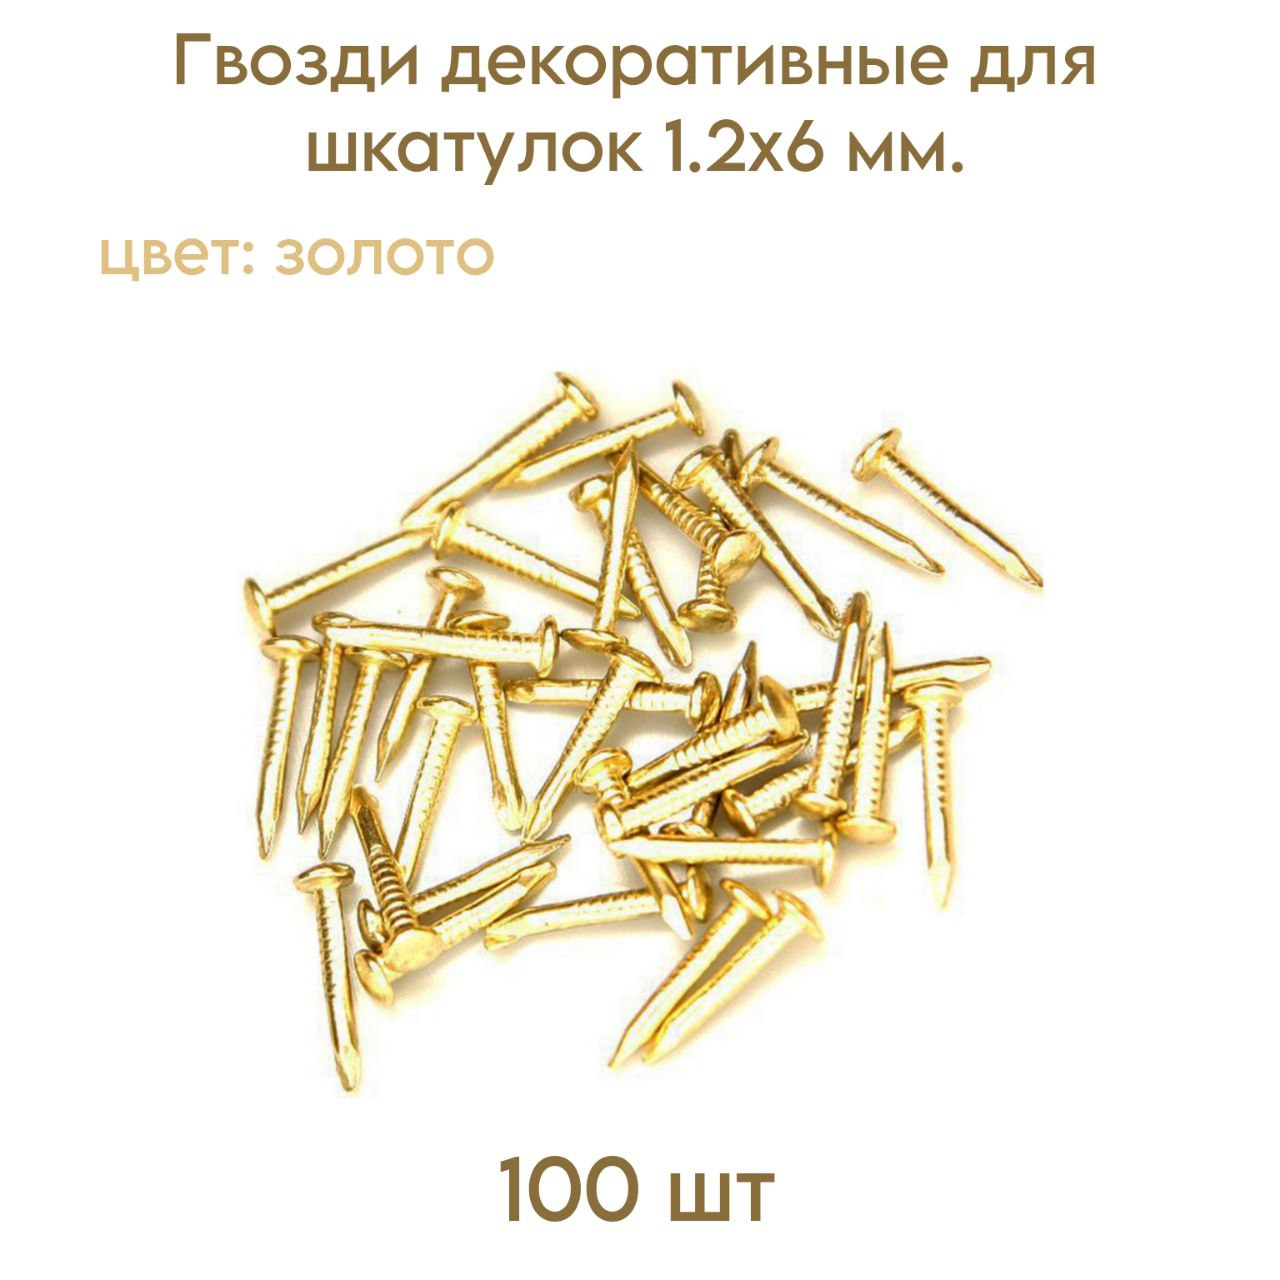 фото Гвозди livgard декоративные для шкатулок, золото, 1.2х6 мм 100 шт